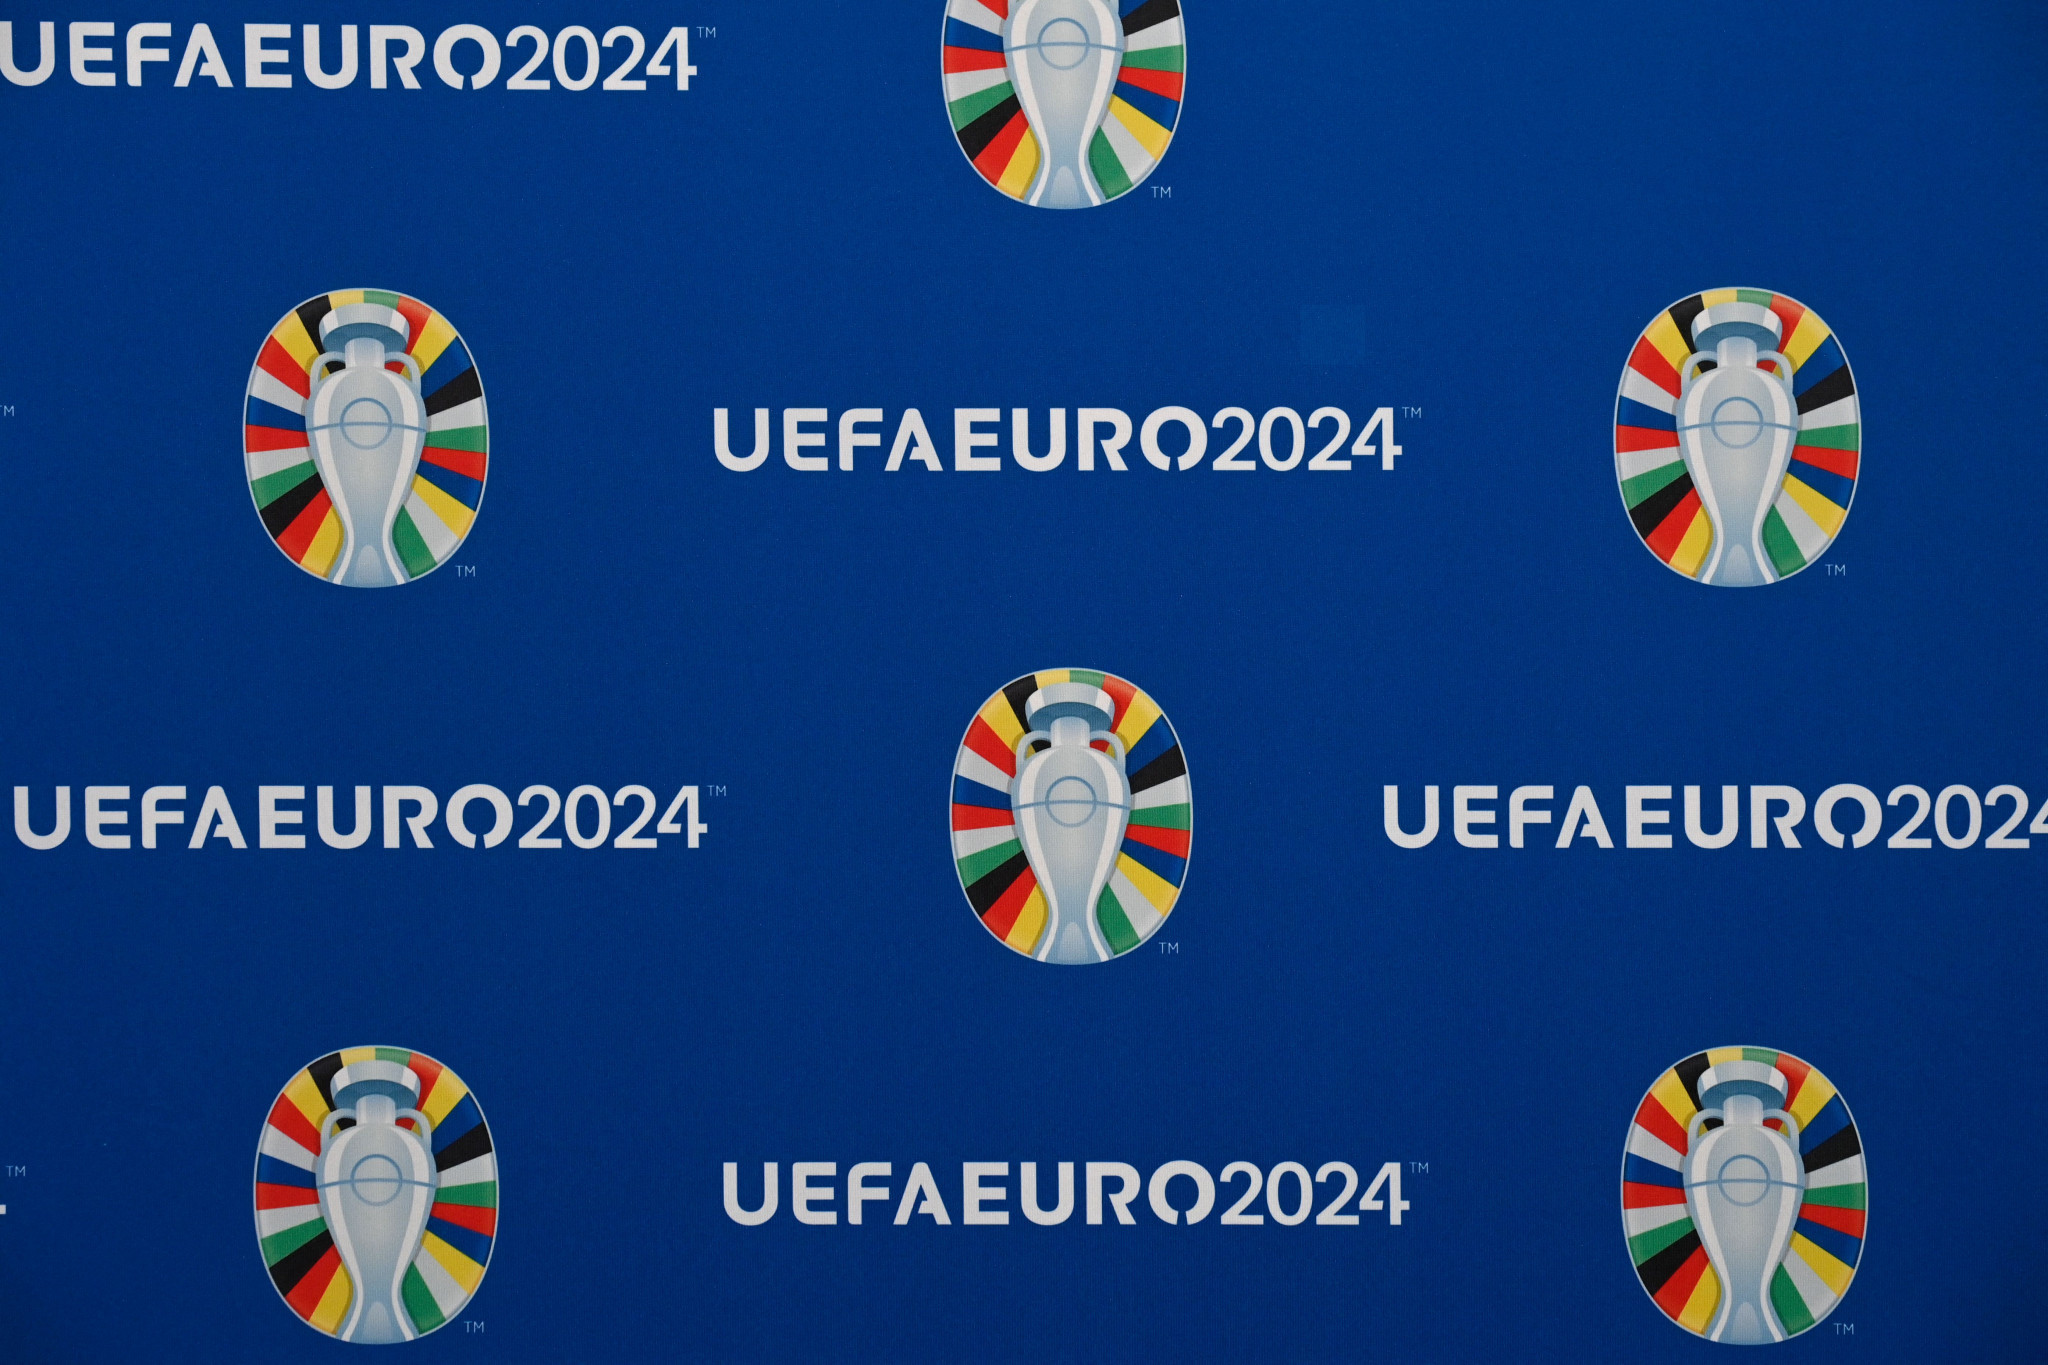 Engelbert Strauss expands UEFA partnership to sponsor Euro 2024